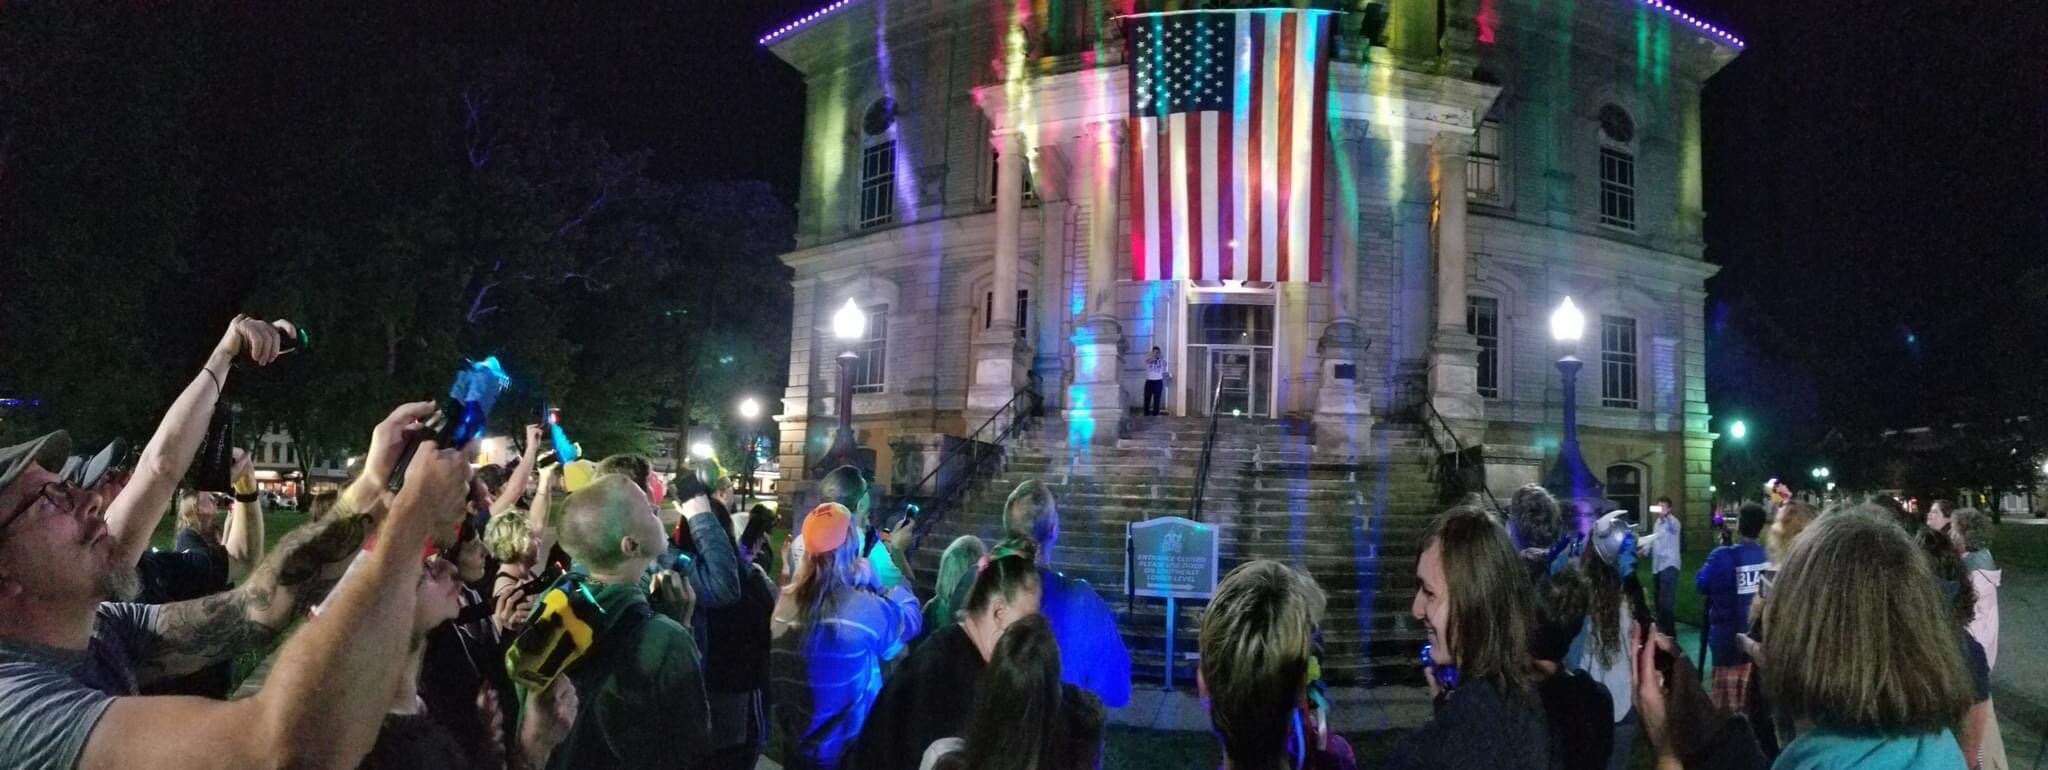 PEOPLE'S LIGHTING OF THE COURTHOUSE — Newark Ohio Pride Coalition